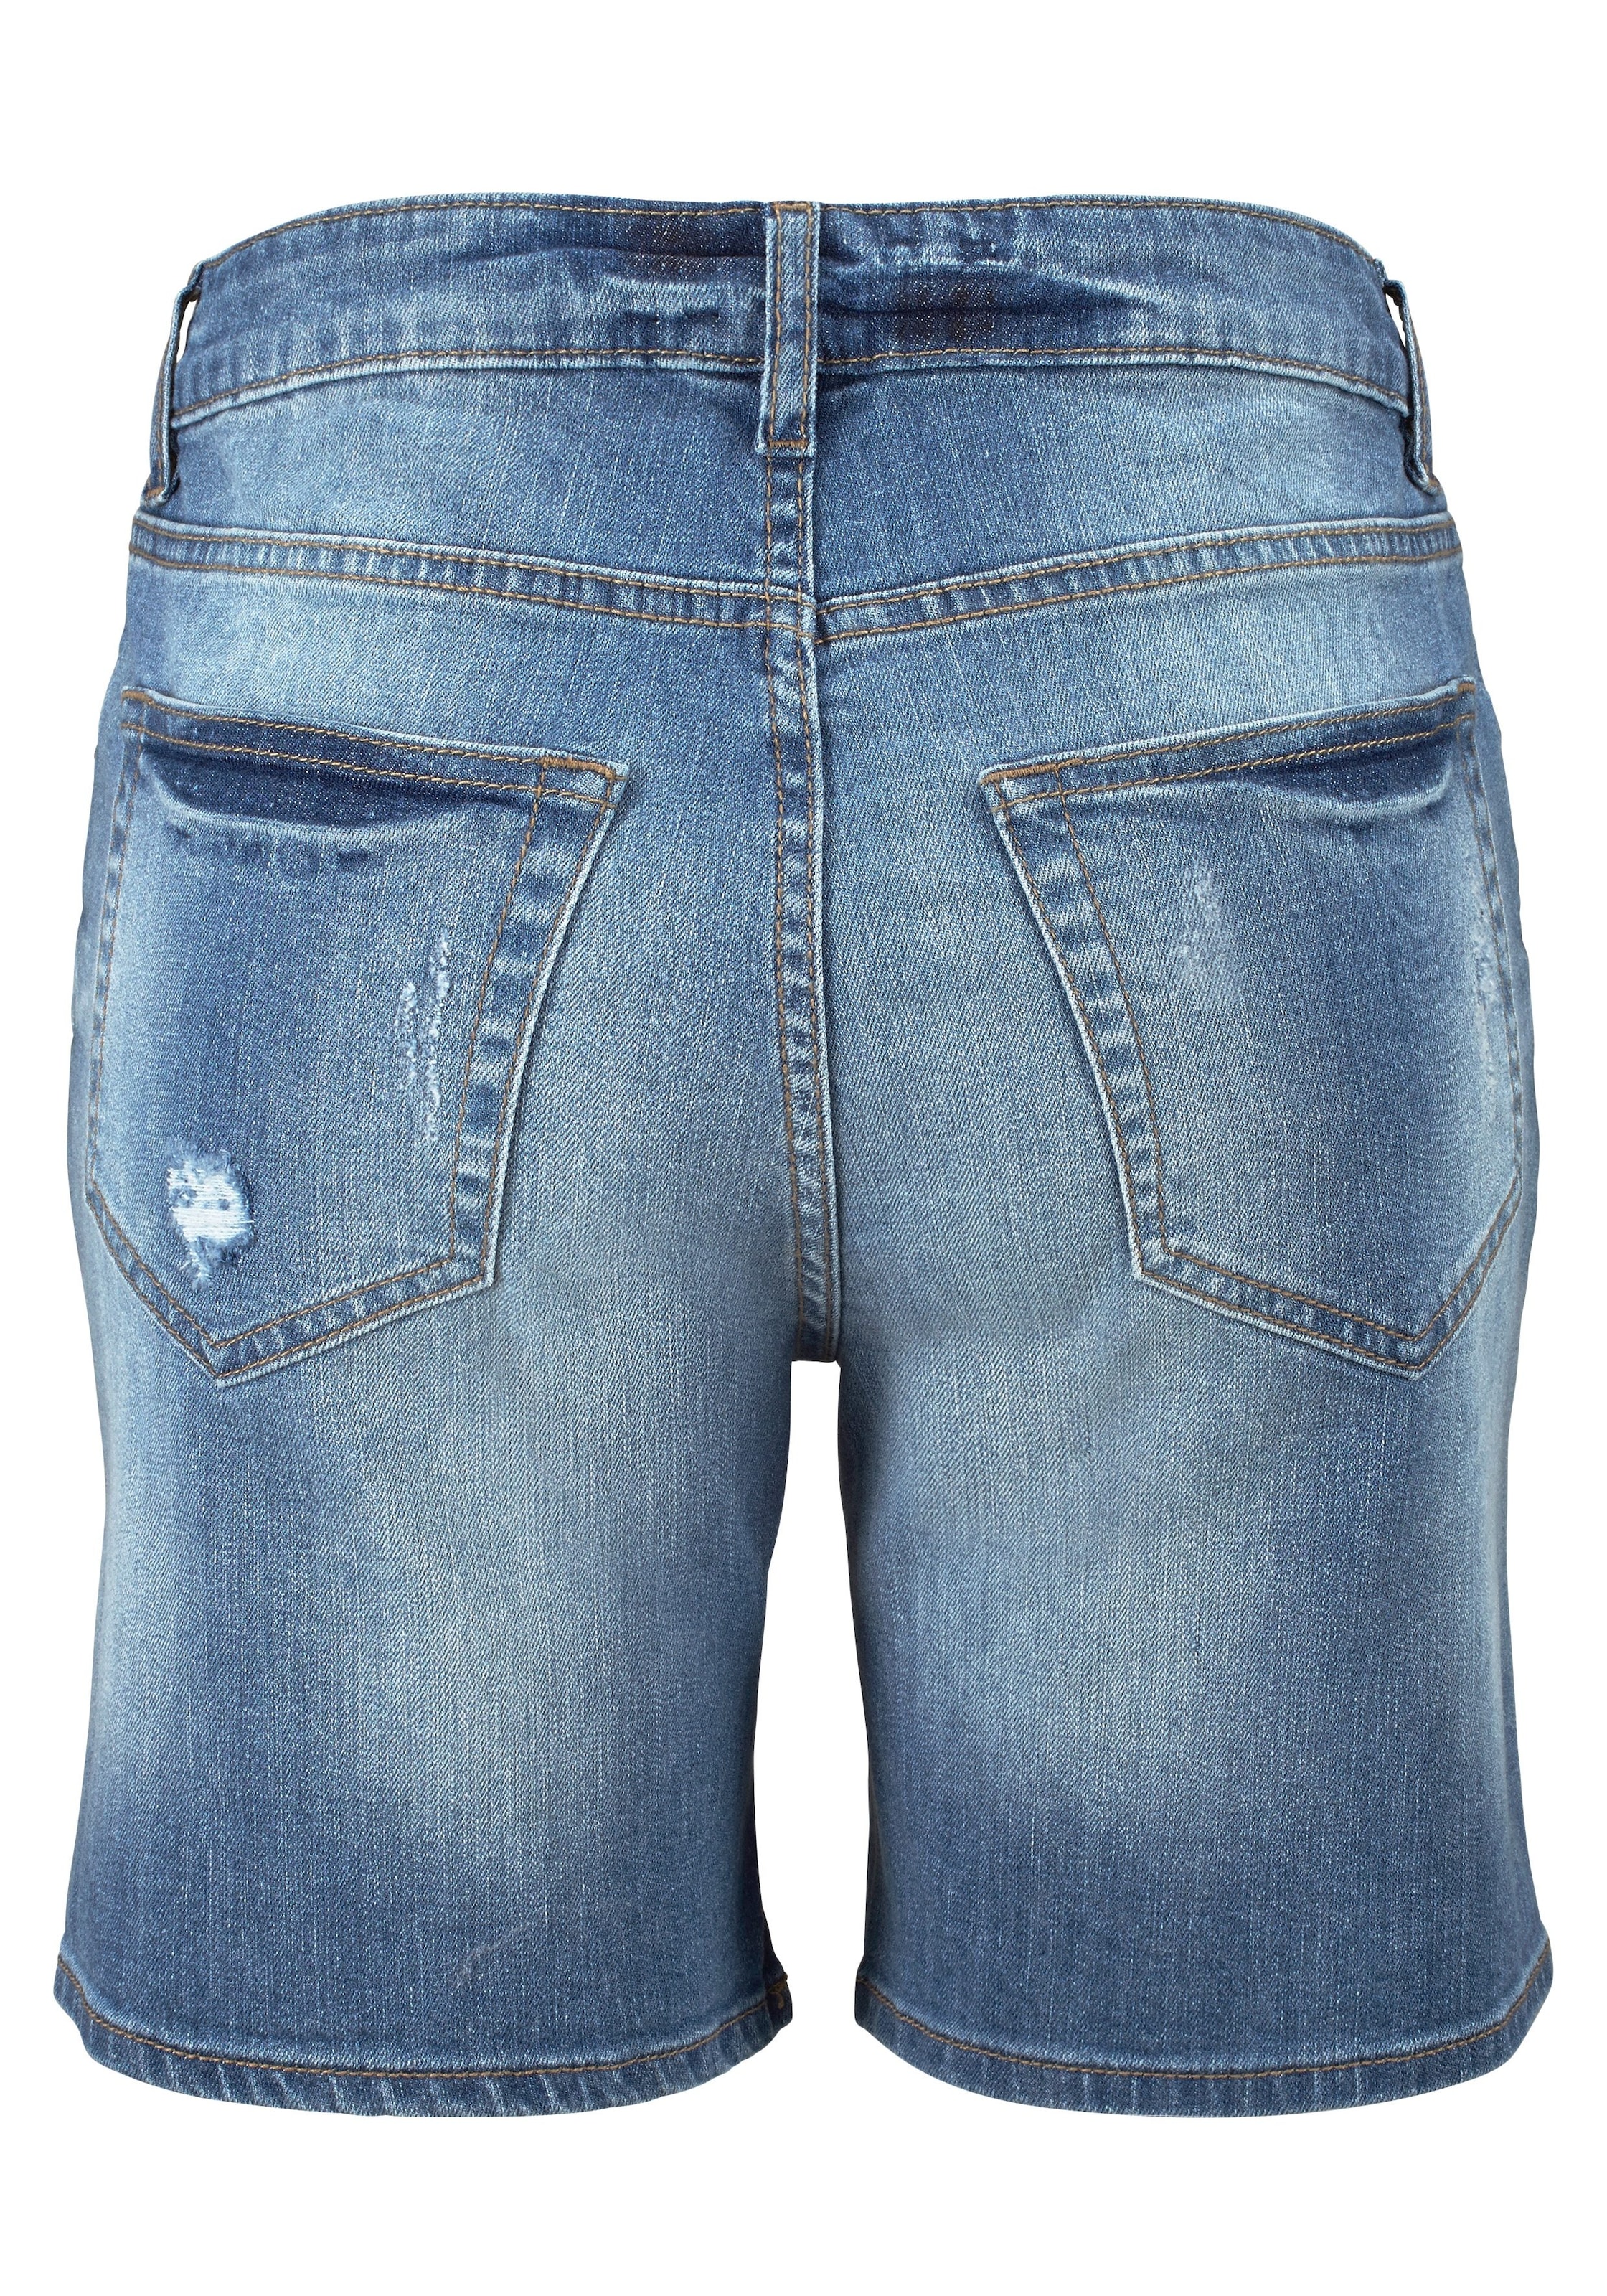 Buffalo Jeansbermudas, mit Destroyed-Effekten, Shorts zum Krempeln, kurze Hose